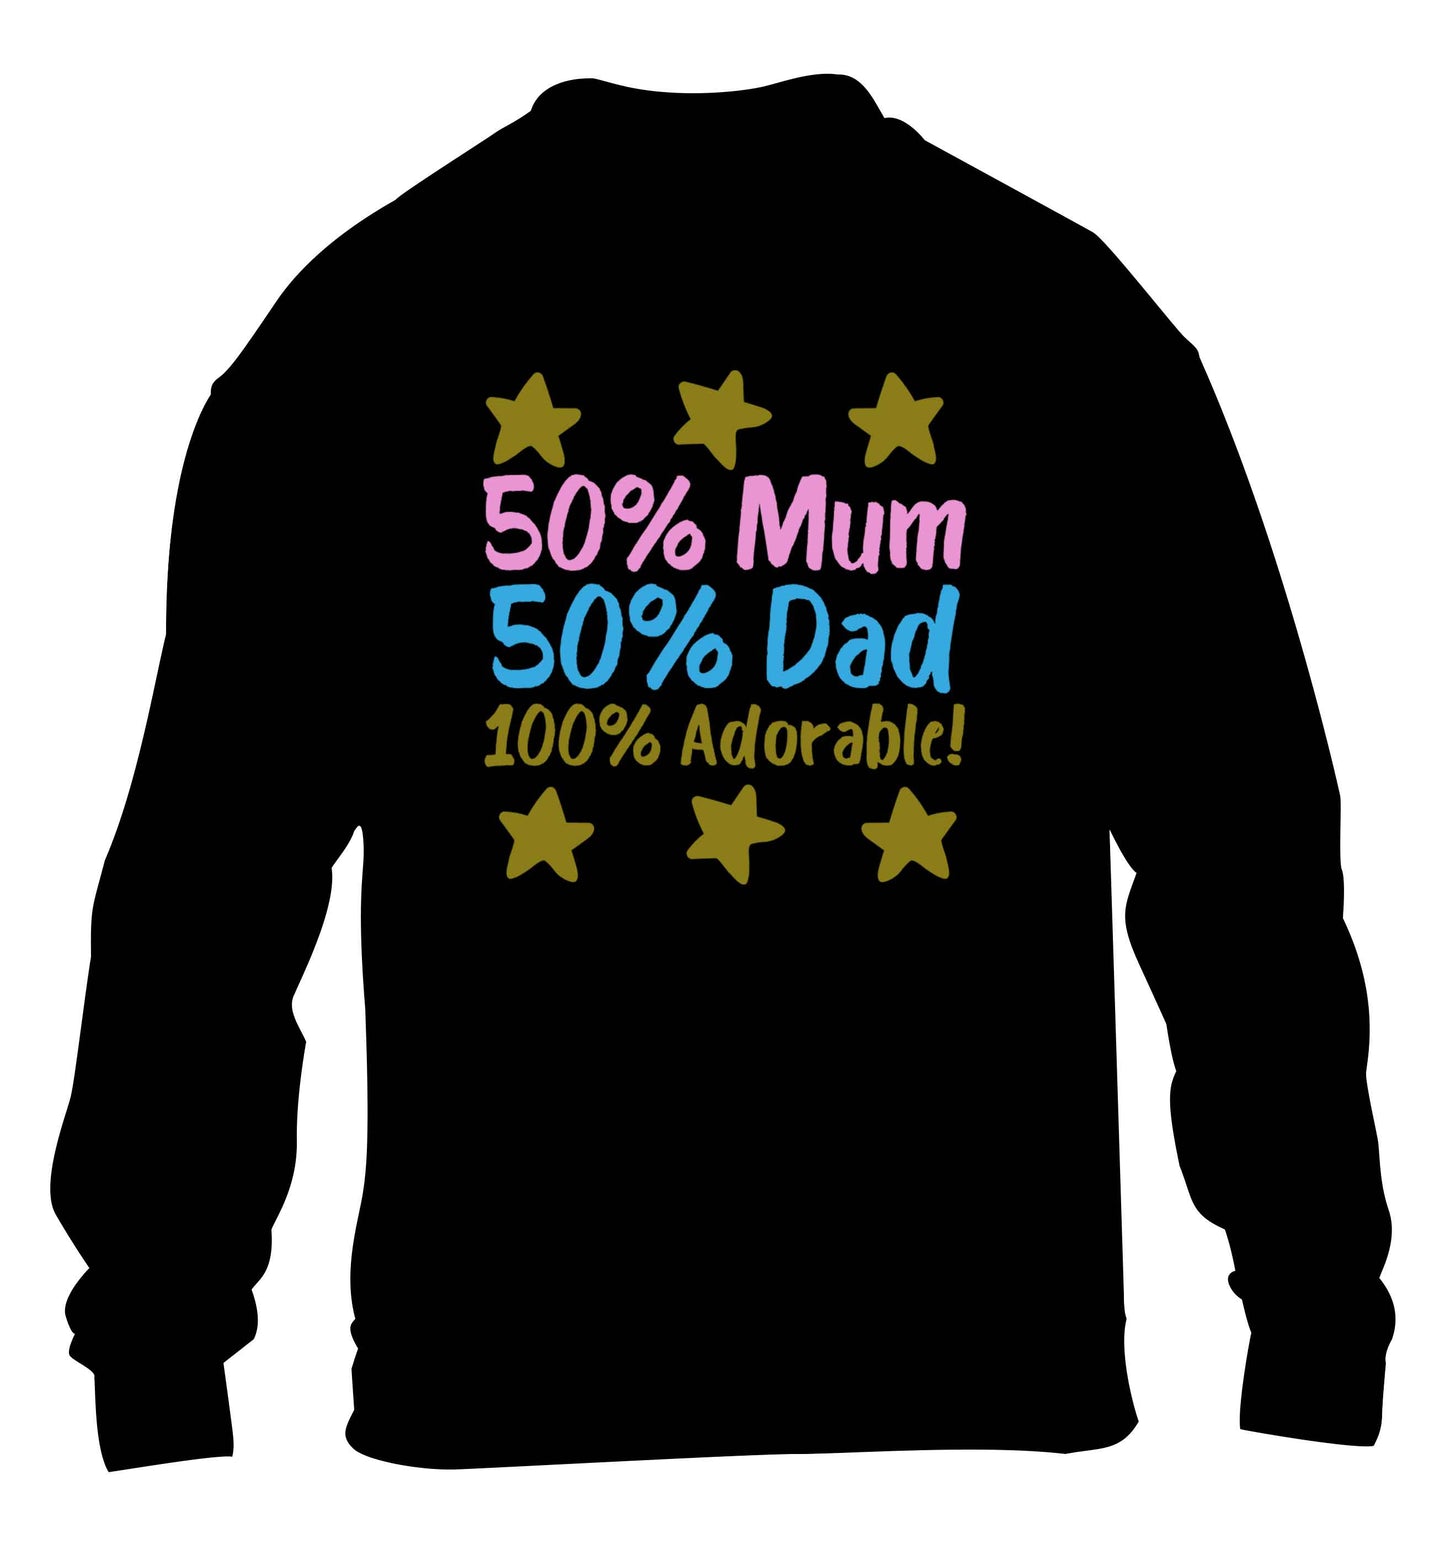 50% mum 50% dad 100% adorable children's black sweater 12-13 Years